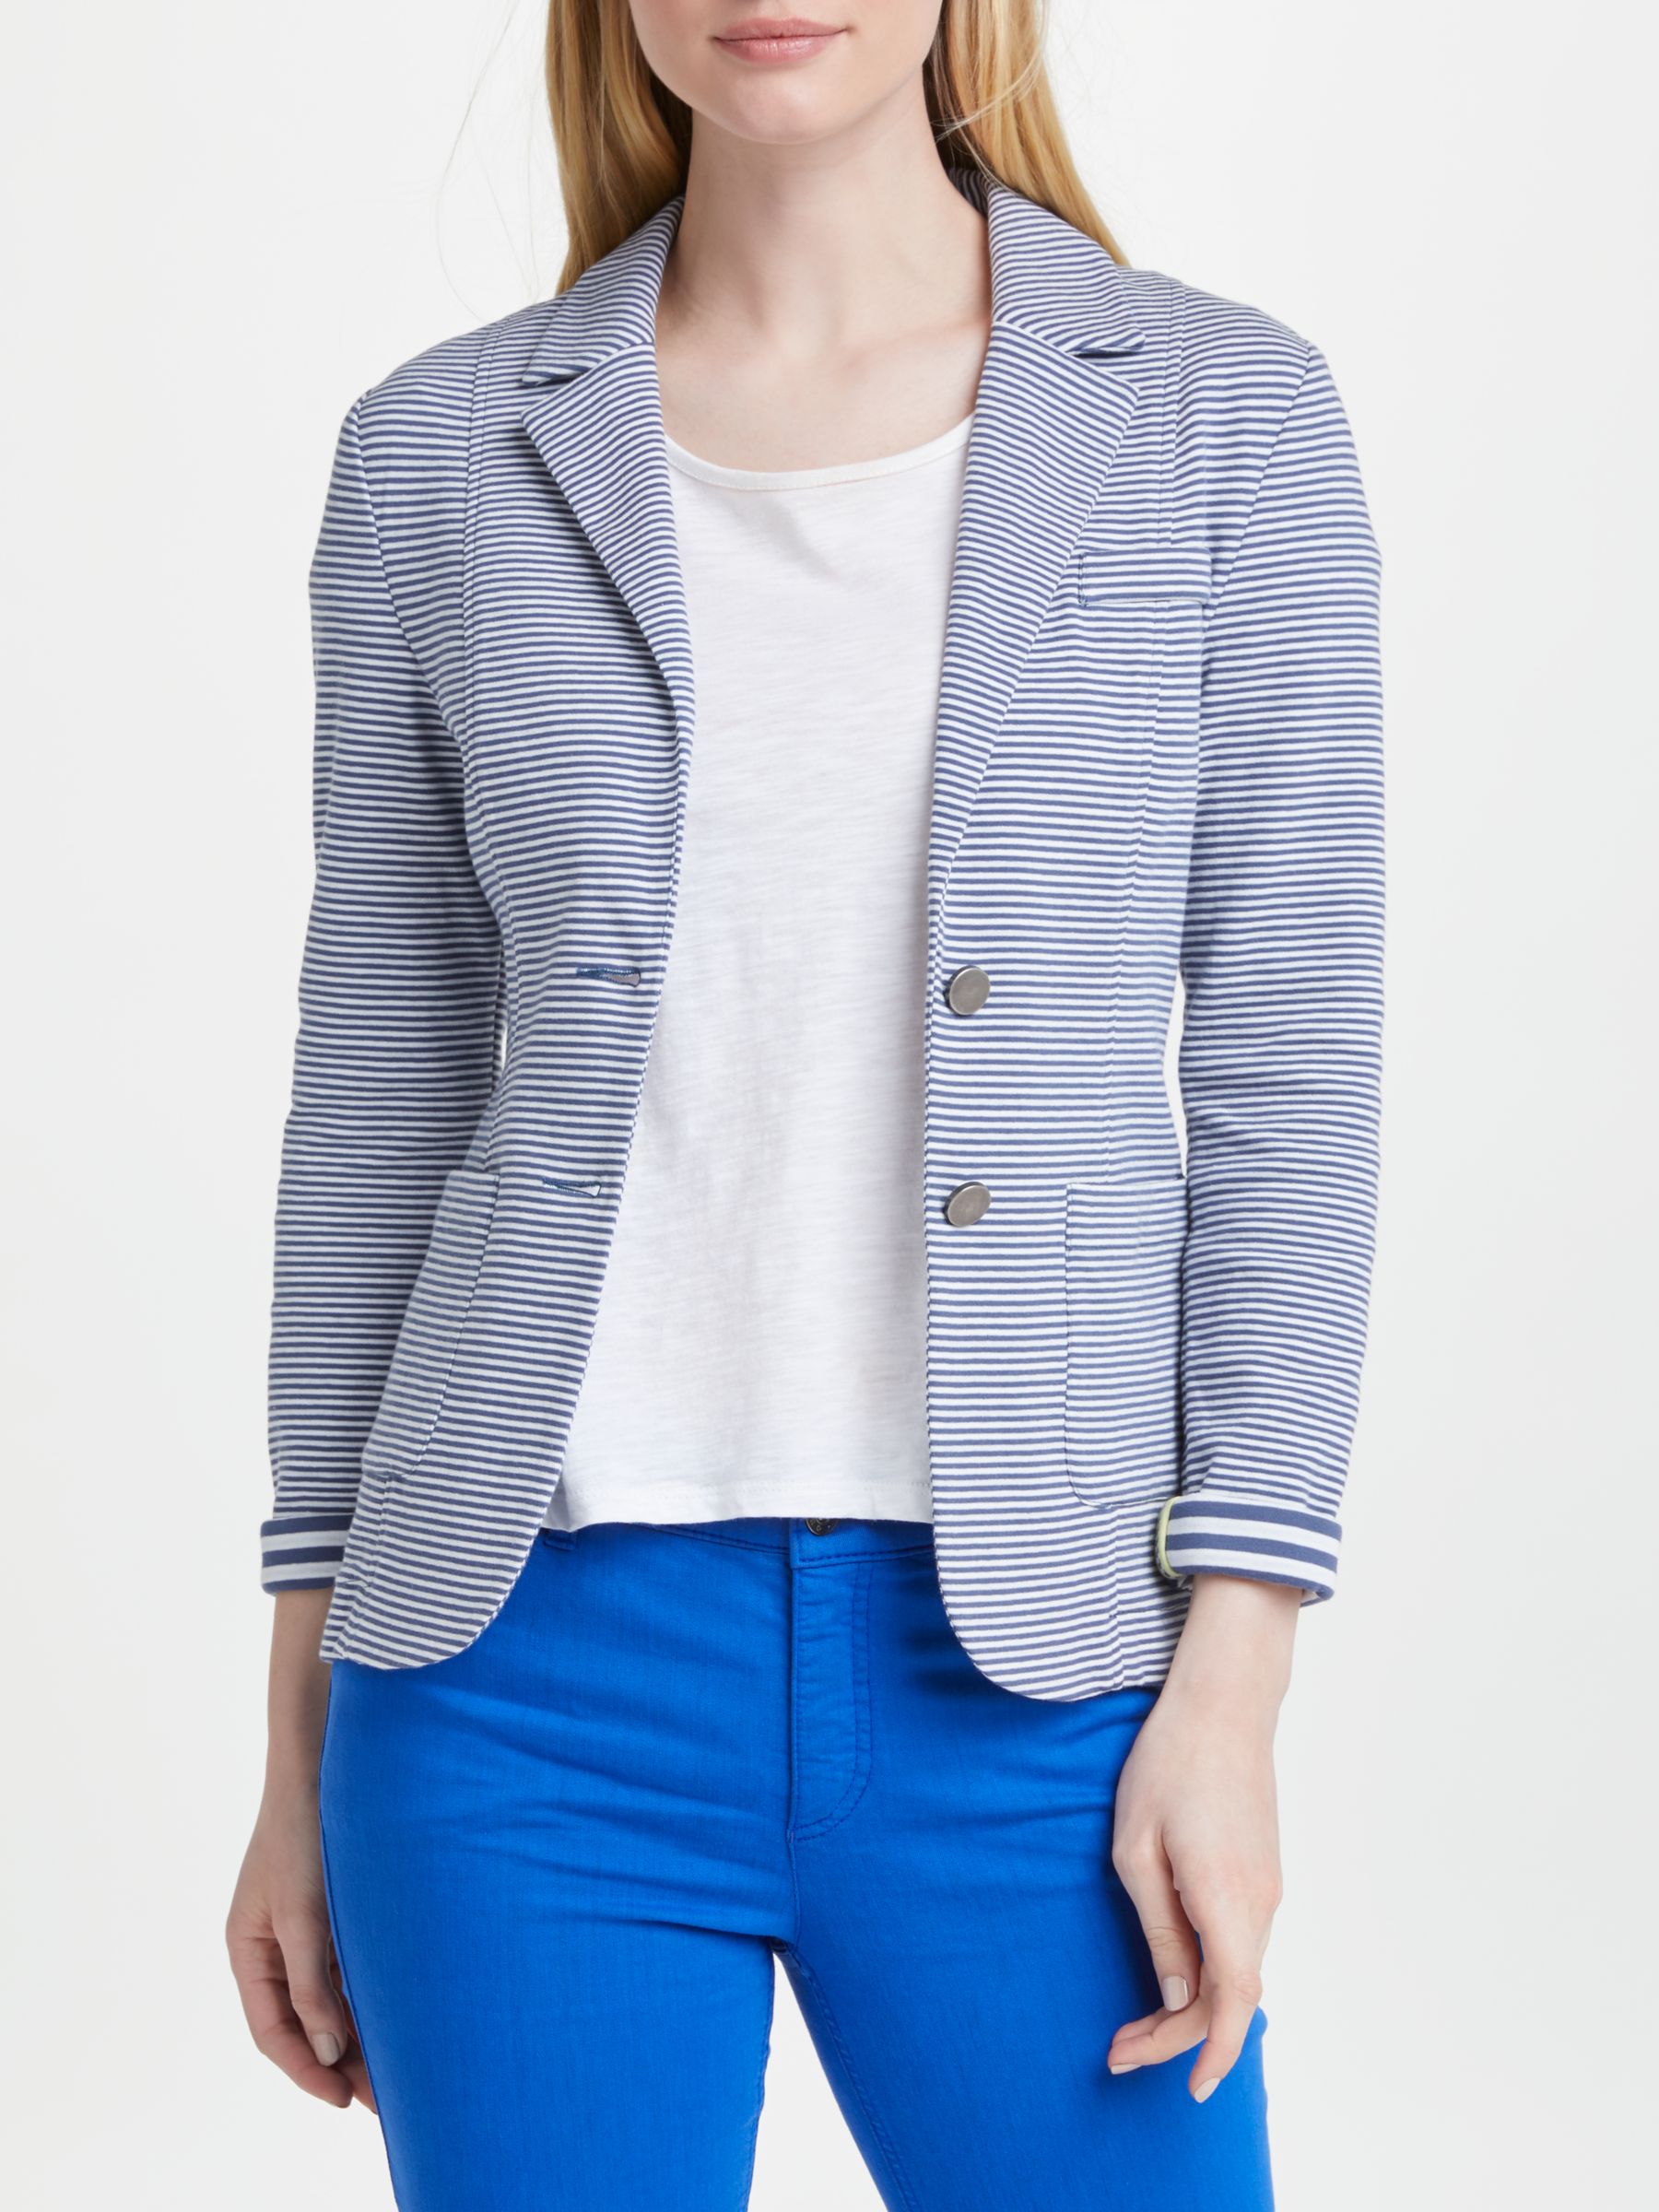 John Lewis John Lewis Womens Blue Striped  Jacket Suit Jacket Size 10 